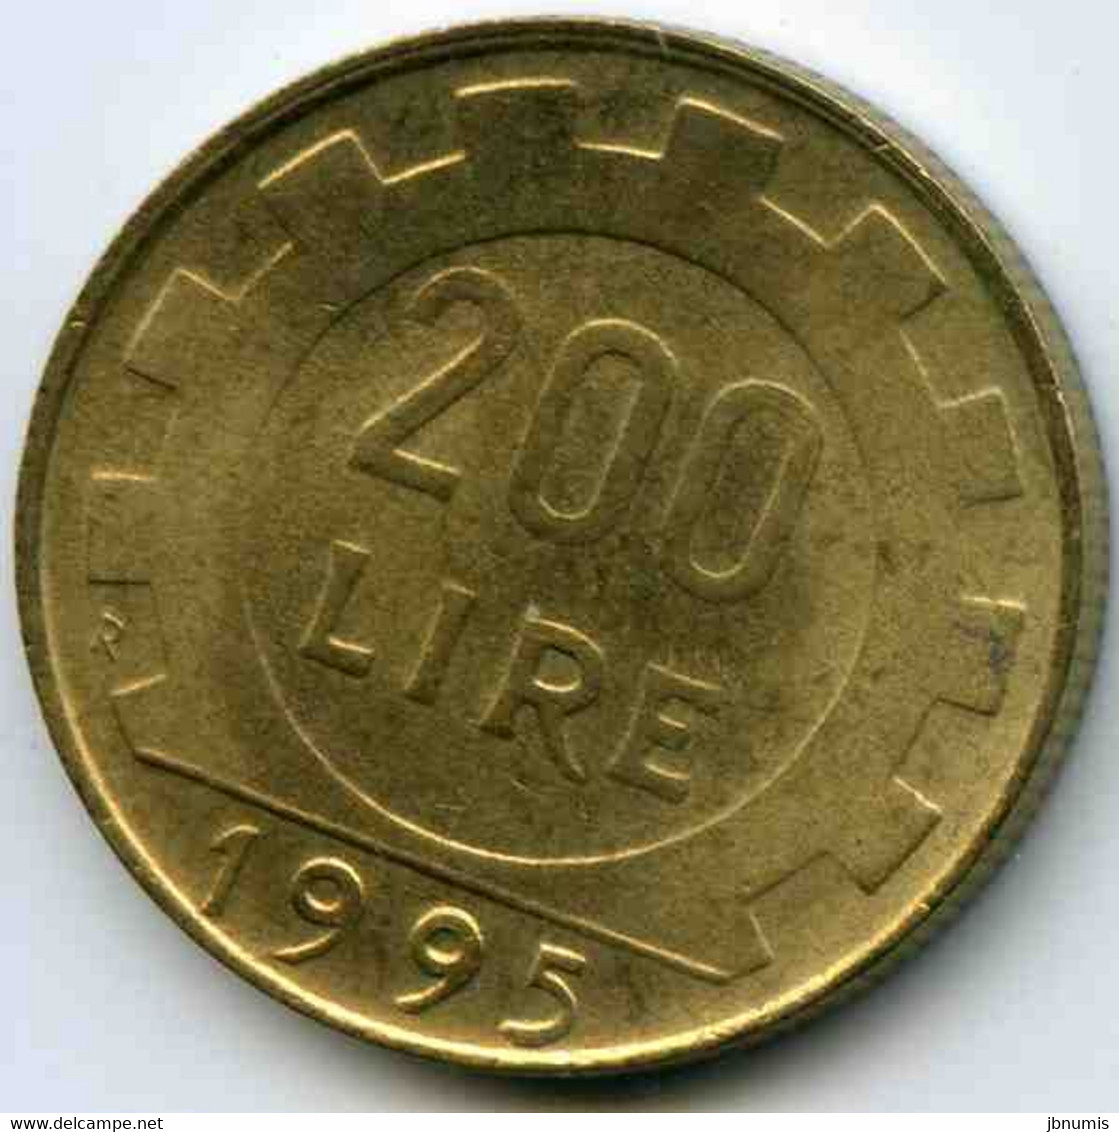 Italie Italia 200 Lire 1995 KM 105 - 200 Lire